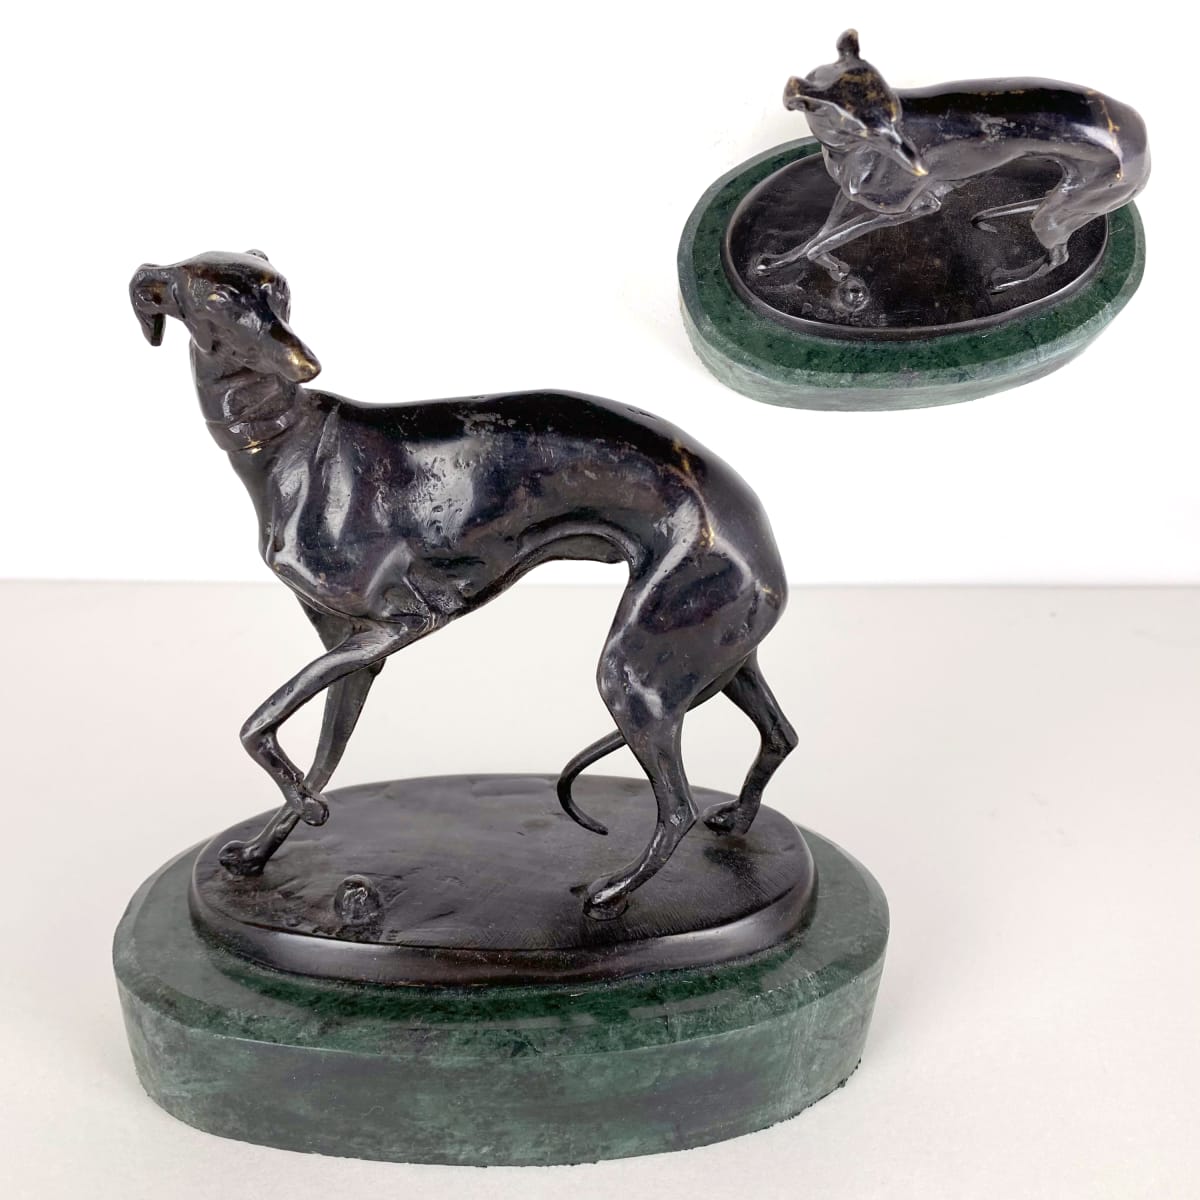 5055 - Bronze Dog Sculpture 